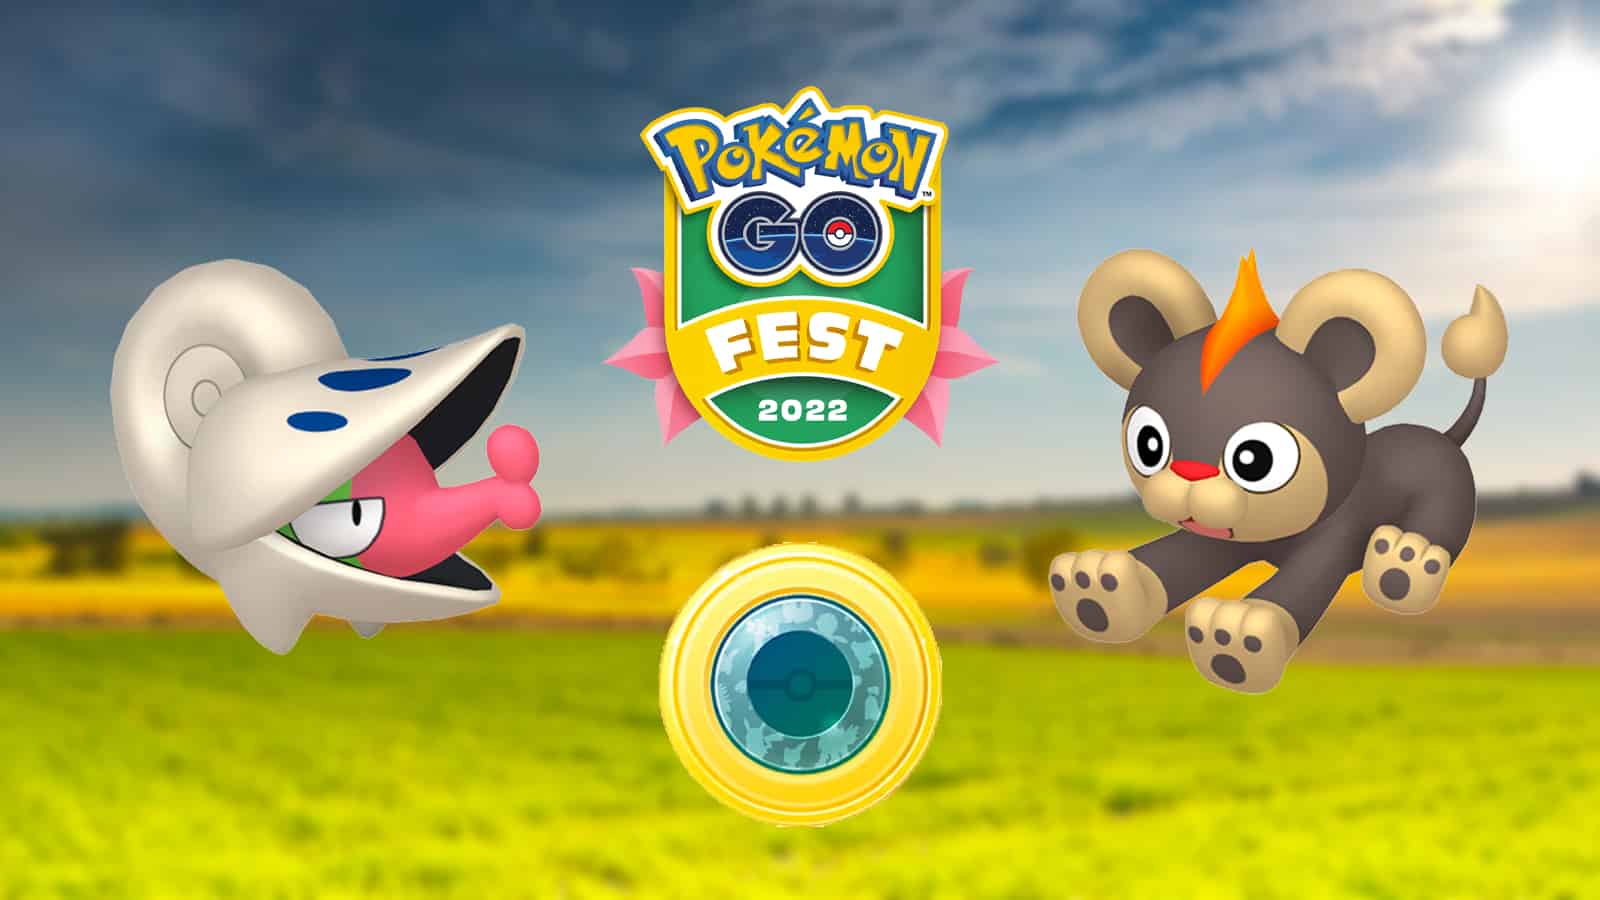 Here's the Pokemon Go Fest 2019 map